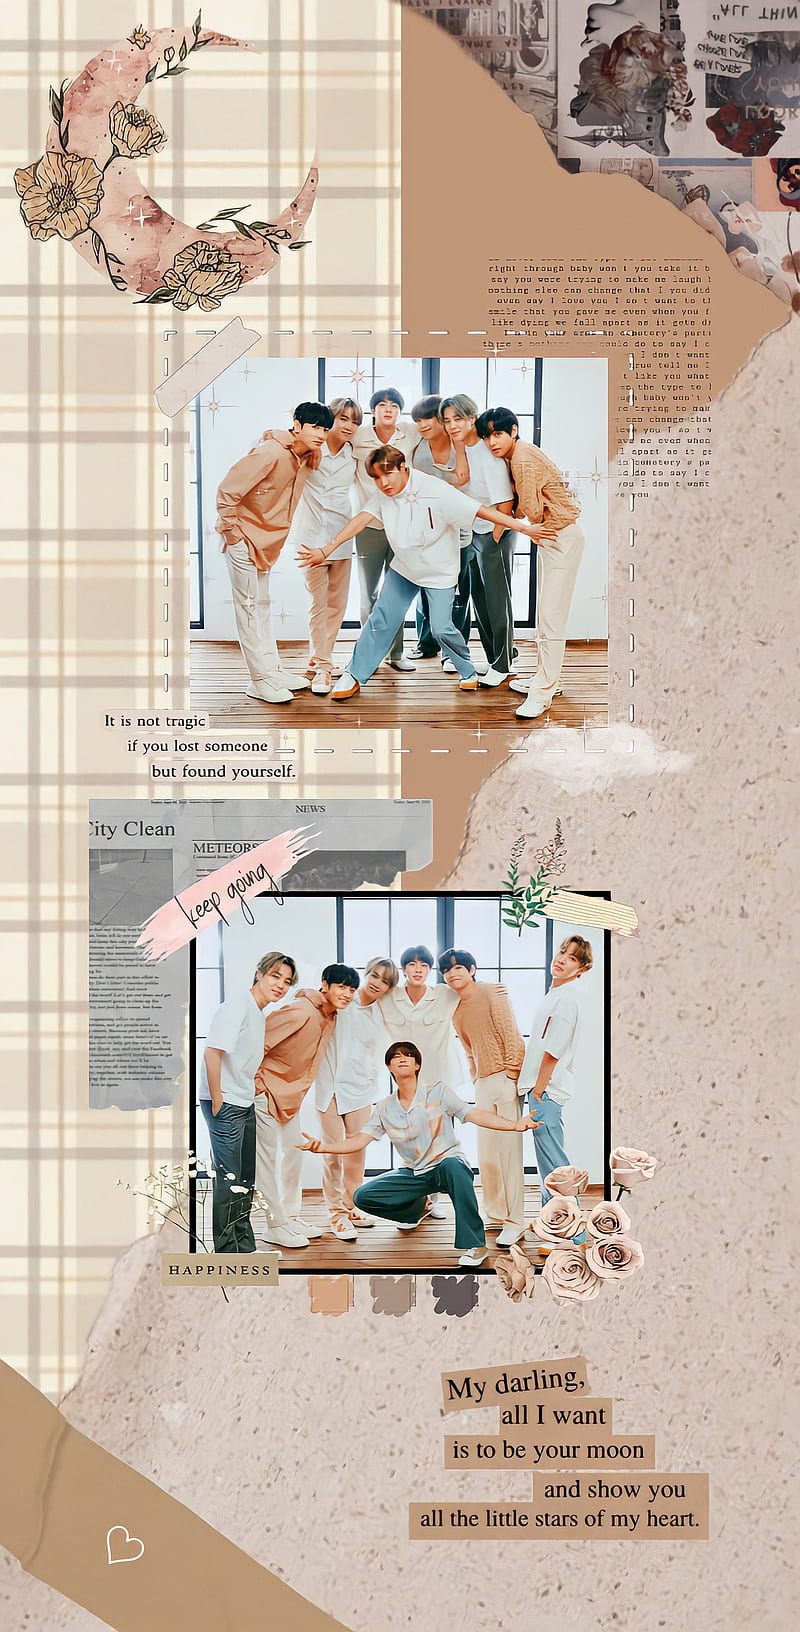 BTS all members in 'Festa 2022' Event Photoshoot 4K wallpaper download